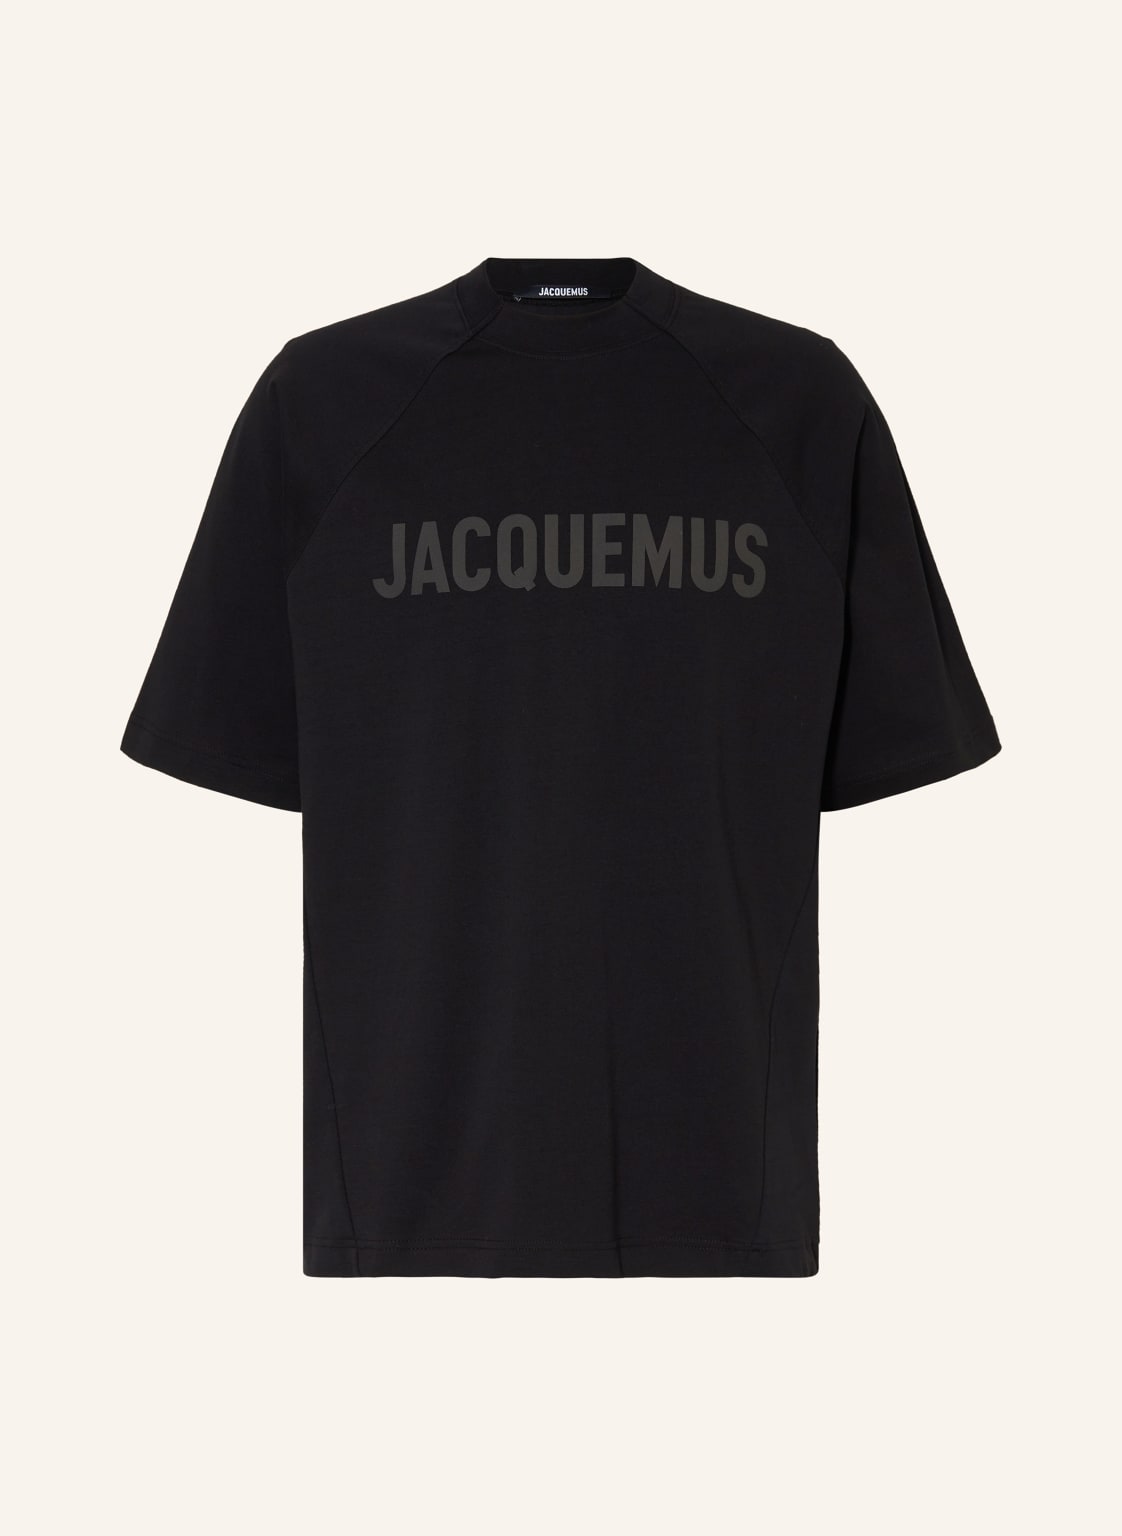 Jacquemus T-Shirt Le Tshirt Typo schwarz von JACQUEMUS